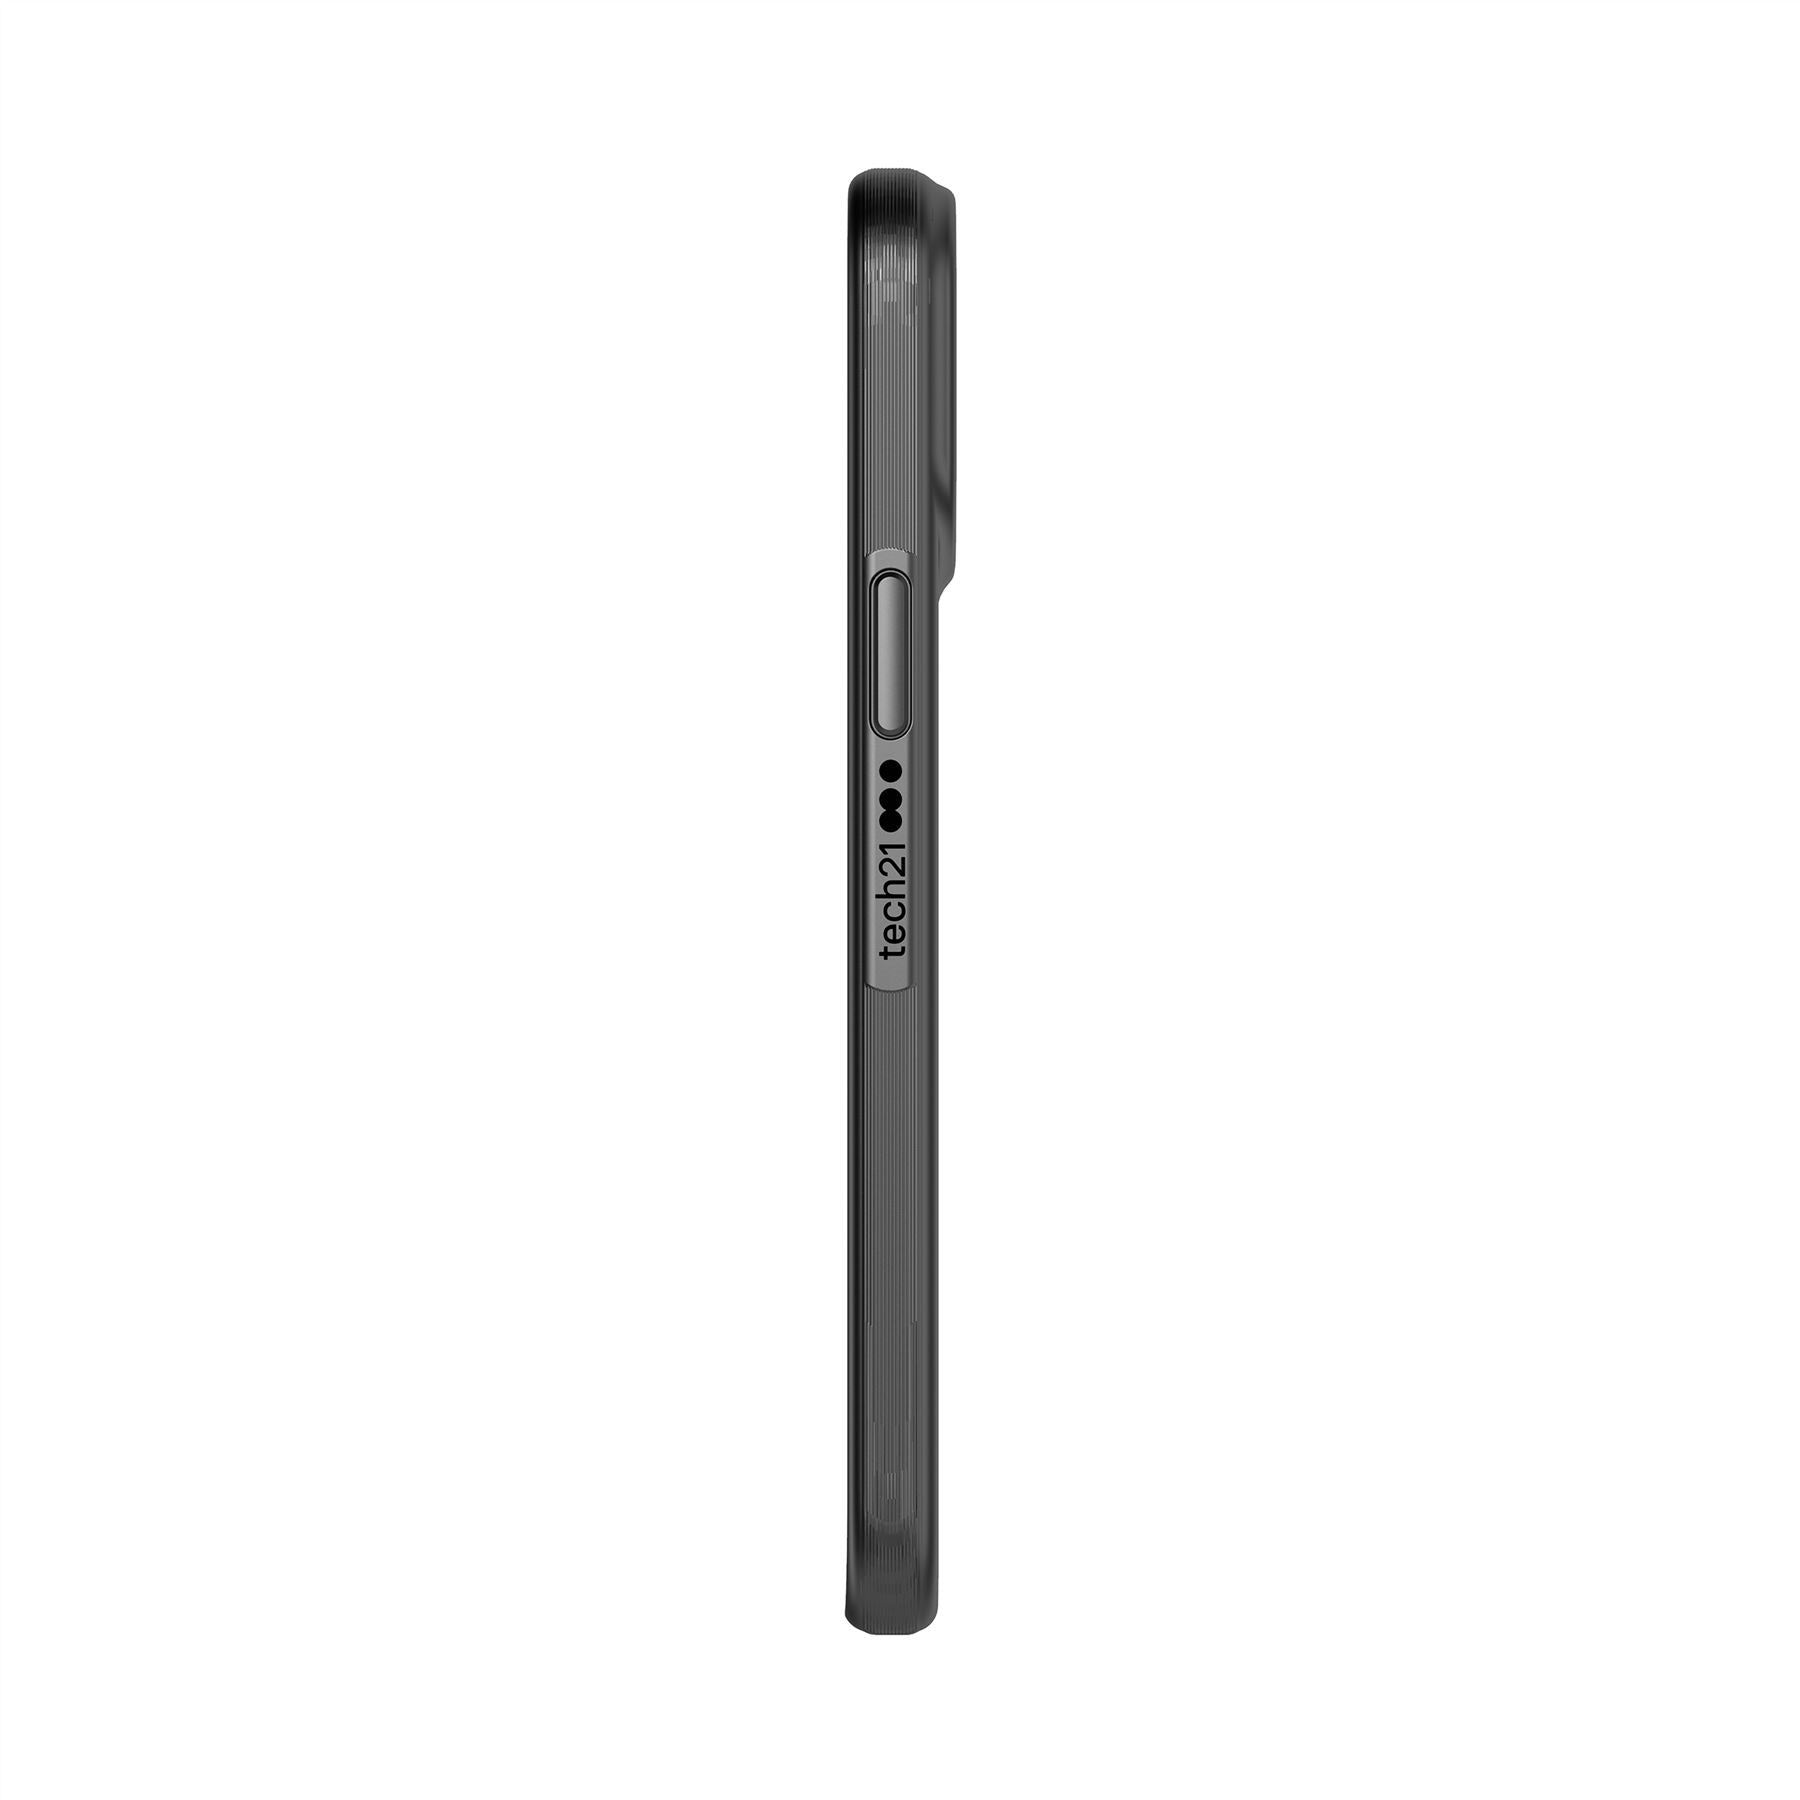 Evo Slim - Apple iPhone 12 Pro Max Case - Charcoal Black